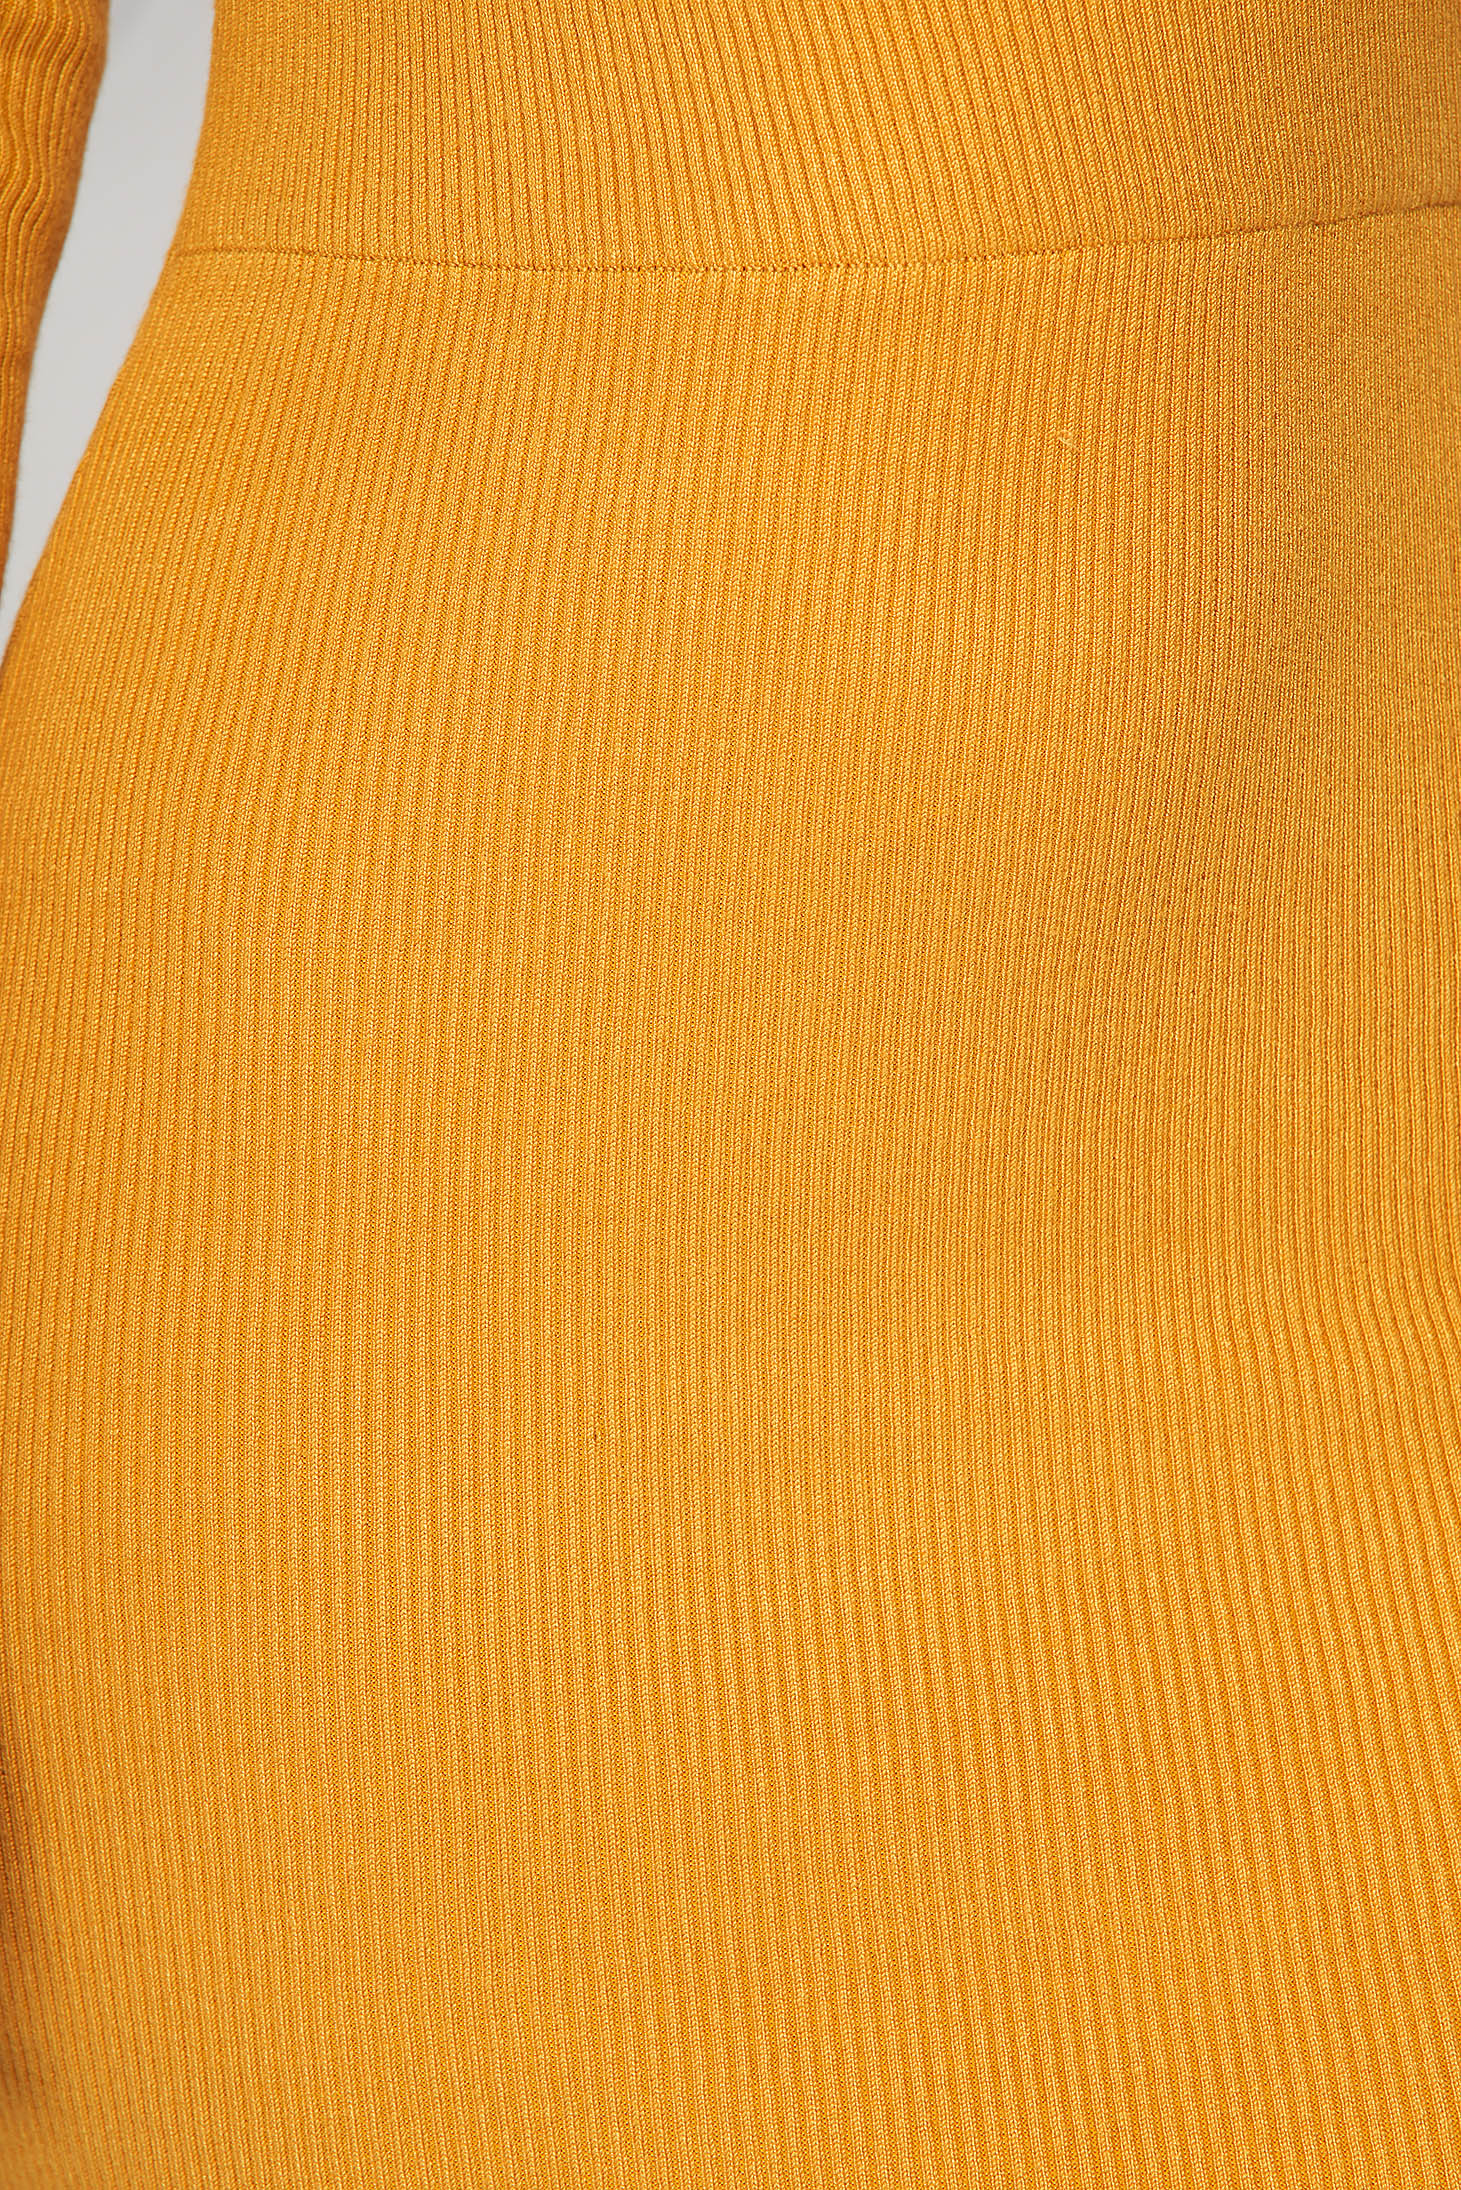 Rochie SunShine mustarie din tricot reiat elastic si fin tip creion cu aplicatii de dantela 4 - StarShinerS.ro